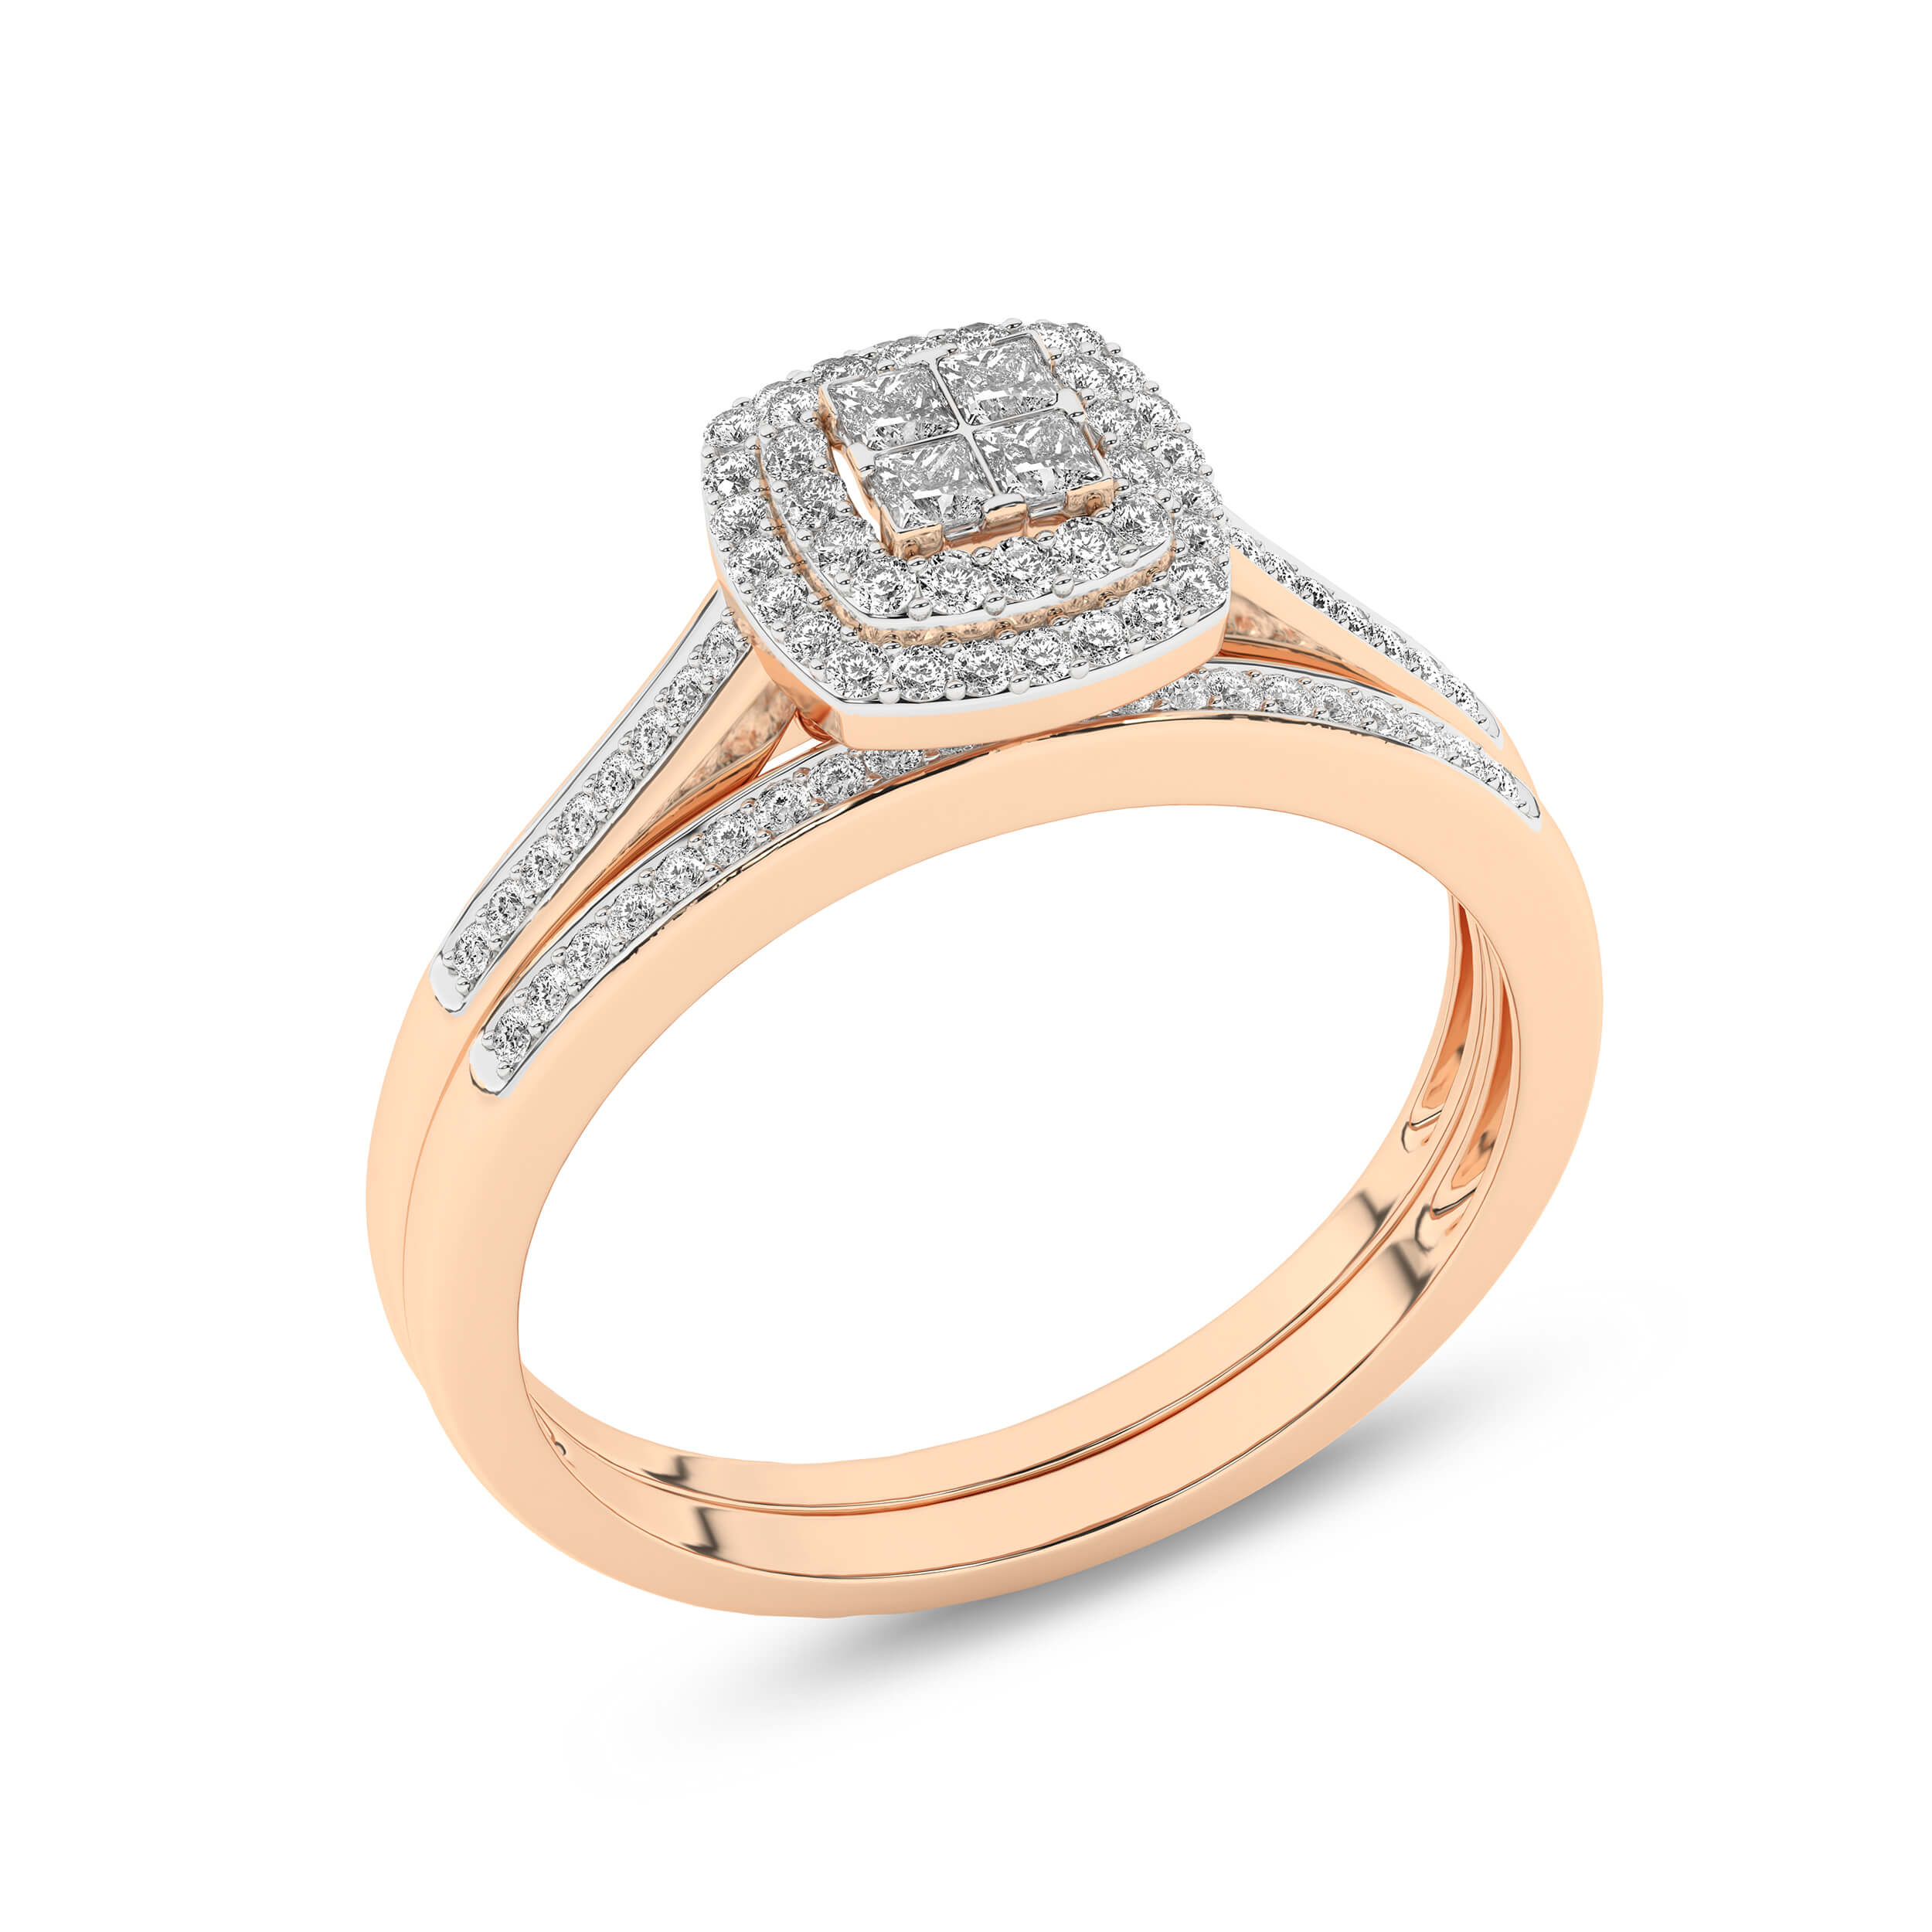 Inel de logodna din Aur Roz 14K cu Diamante 0.25Ct, articol RB13607, previzualizare foto 4